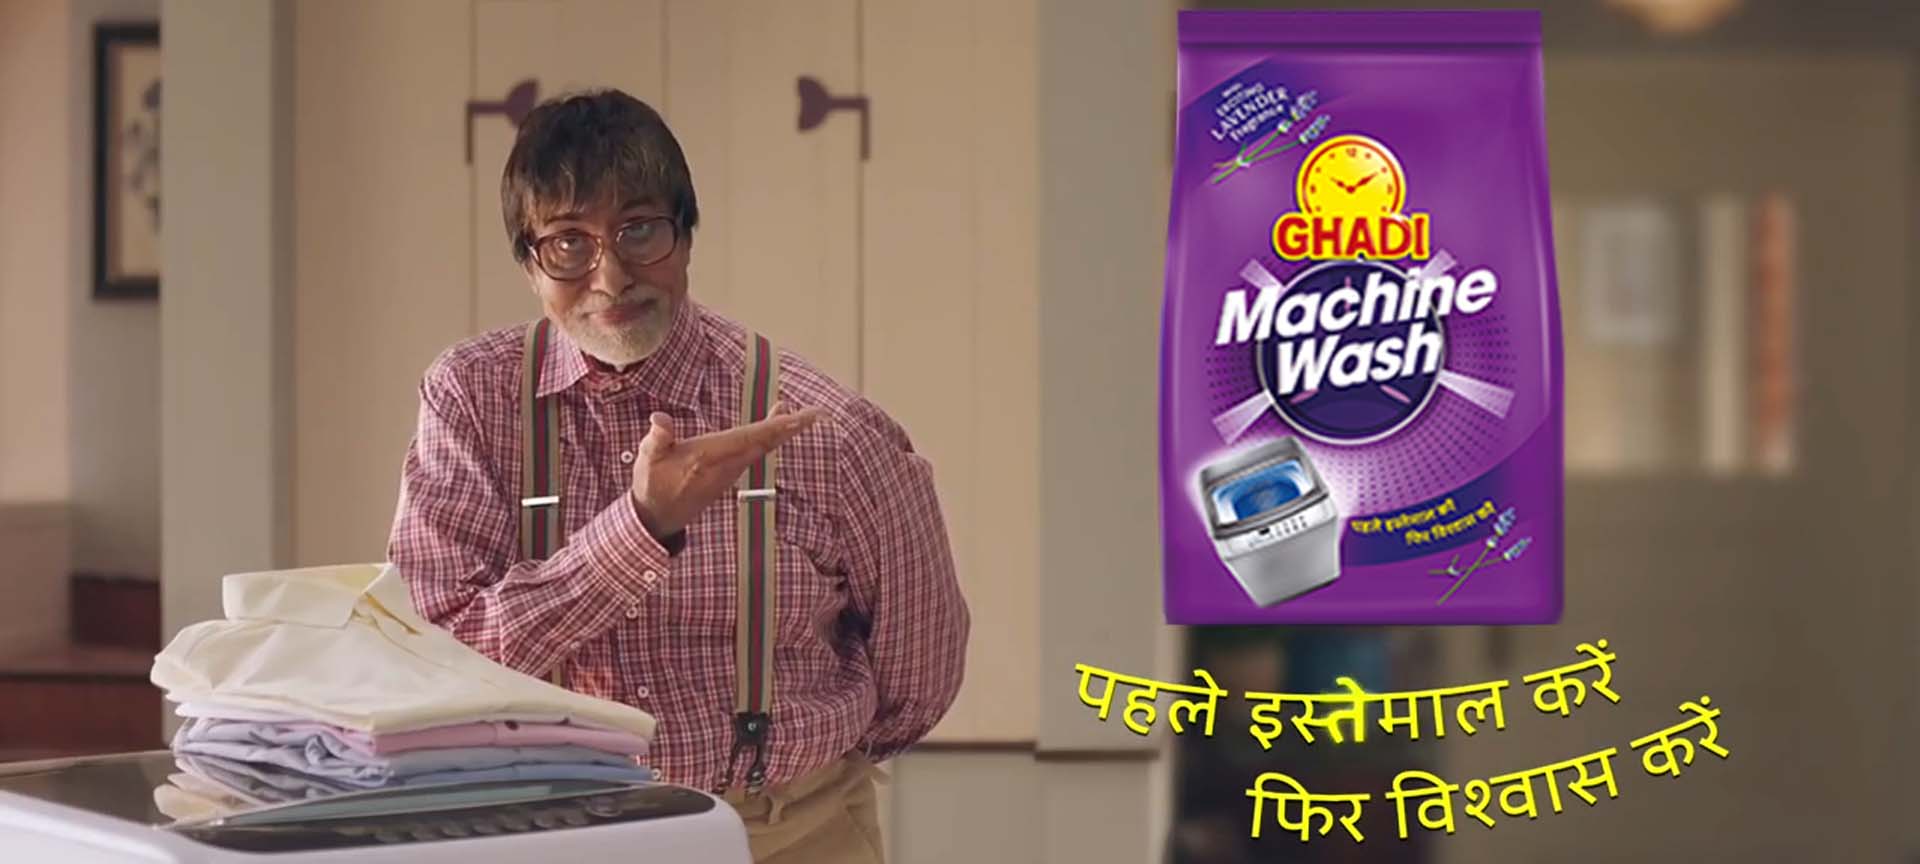 ghadi machine wash, stain remover